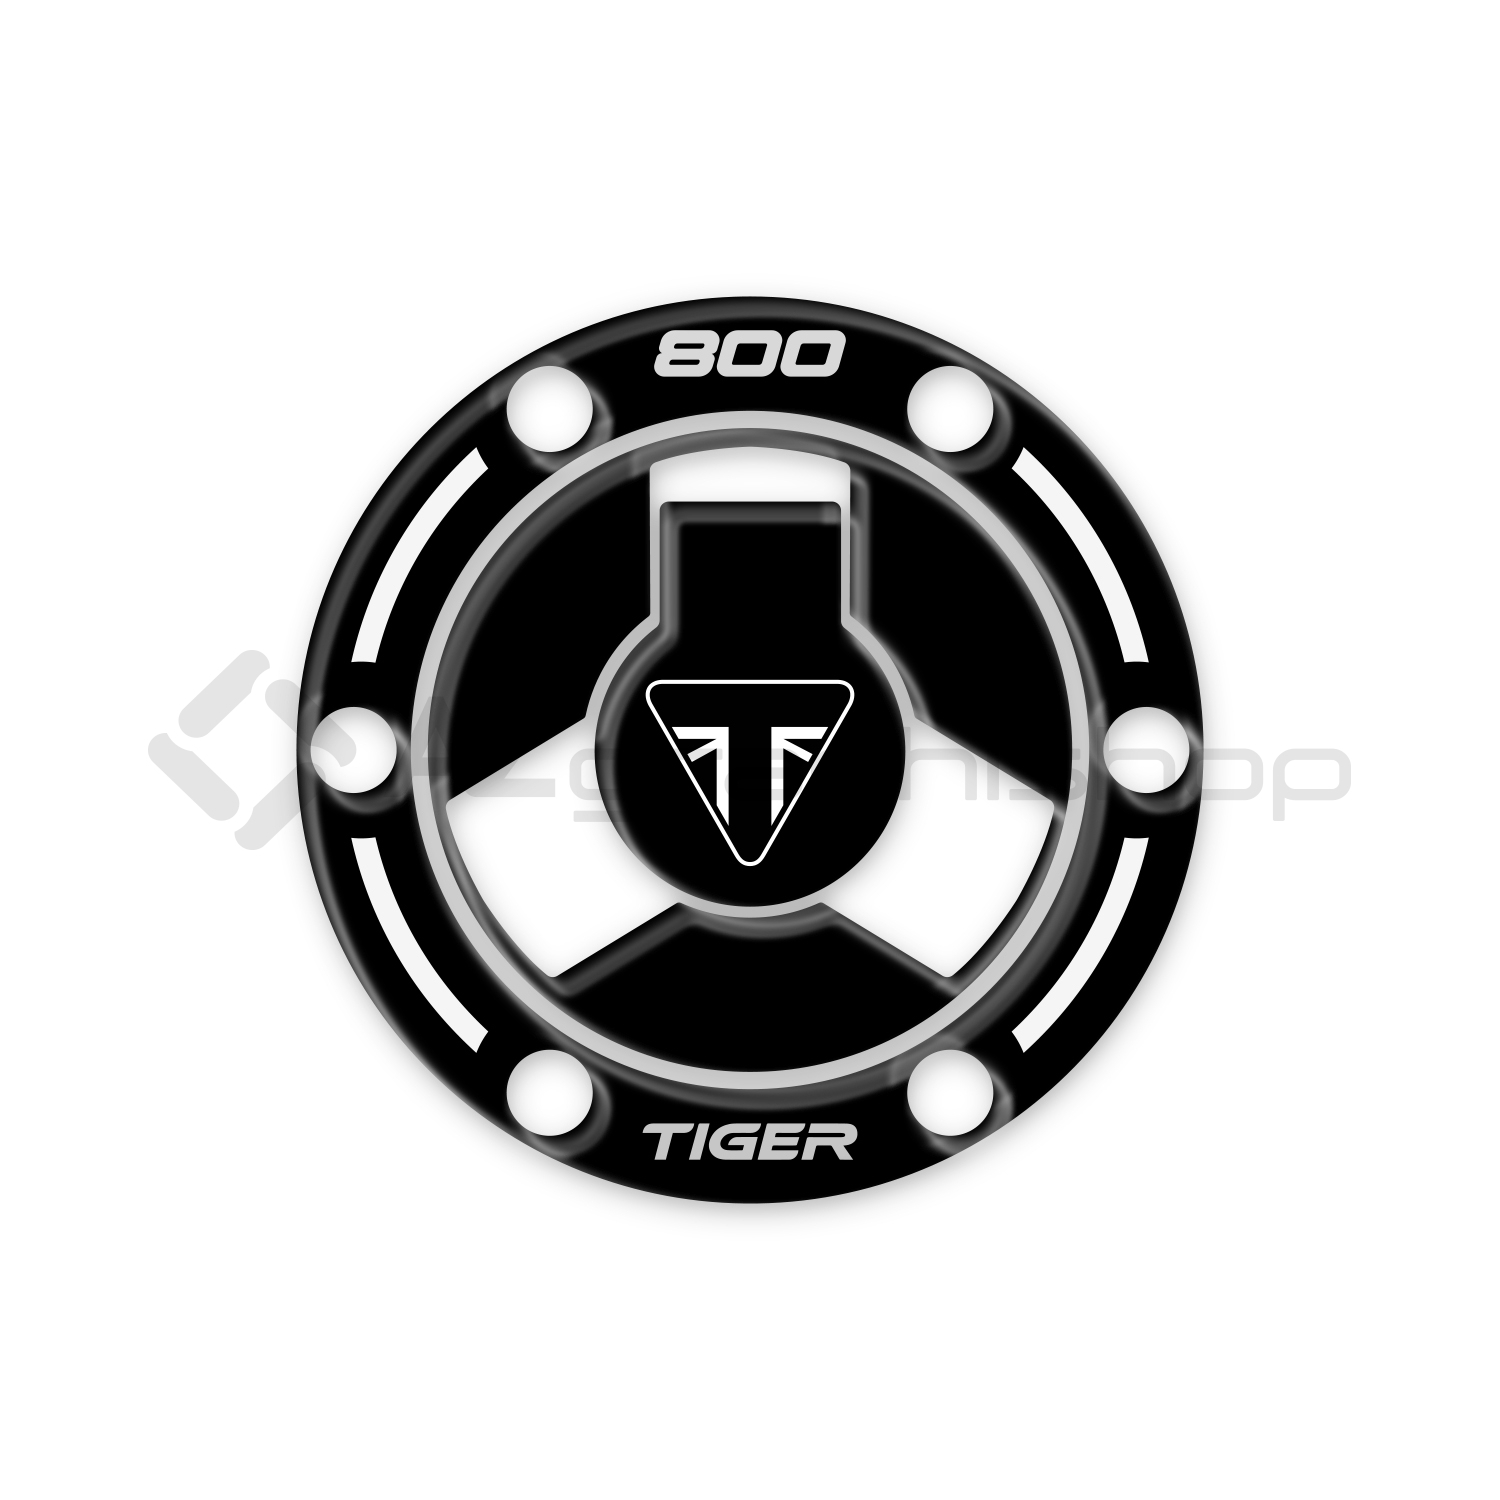 Protezione Tappo Benzina per Triumph Tiger 800 XR XRA XRX XRT XC XCA XCX 2019-2021 GP-637(NWS)